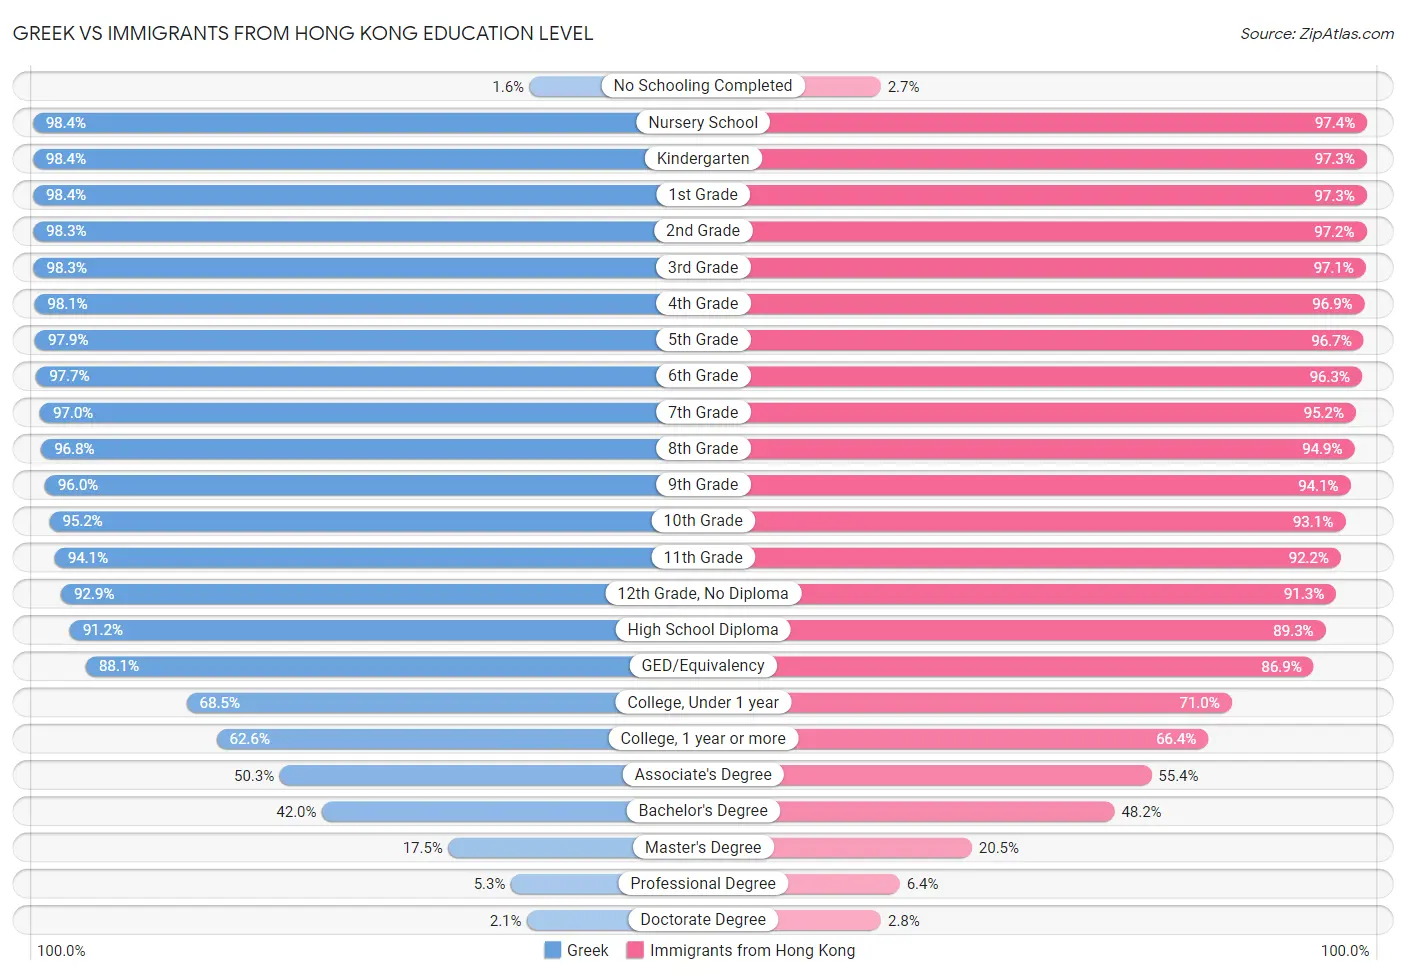 Greek vs Immigrants from Hong Kong Education Level